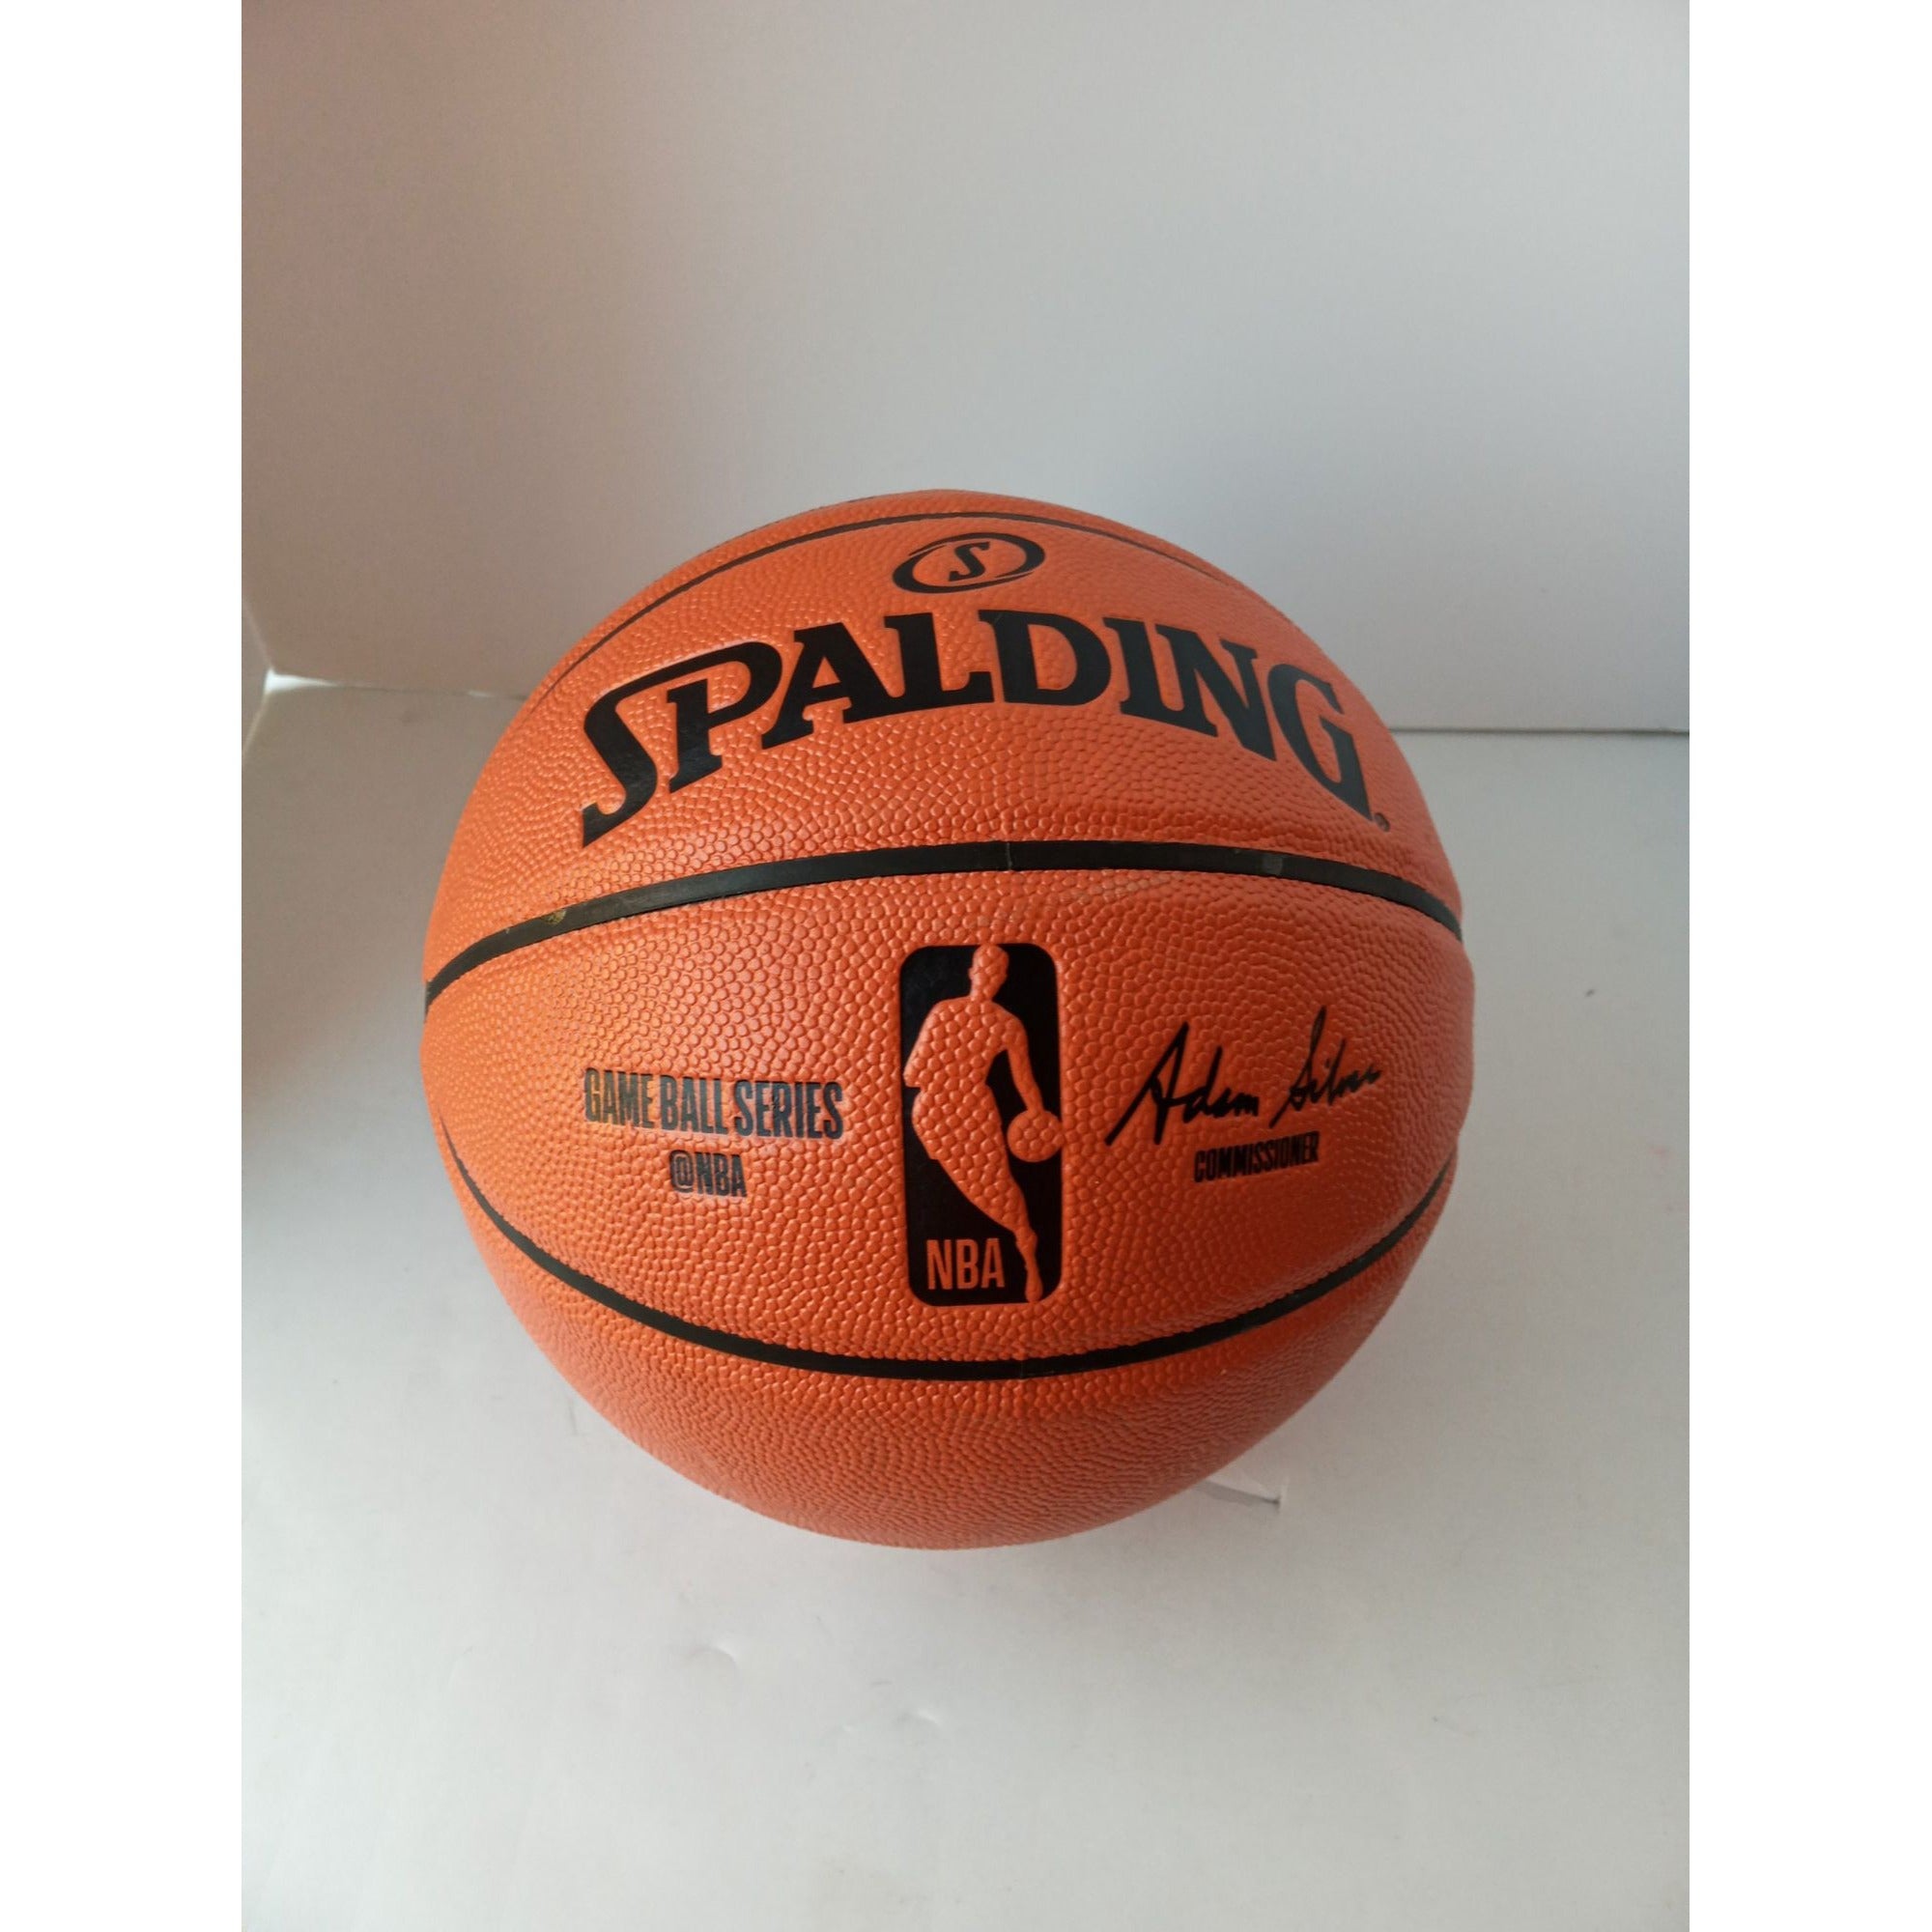 Kobe Bryant and Michael Jordan Spalding basketball NBA signed with proof